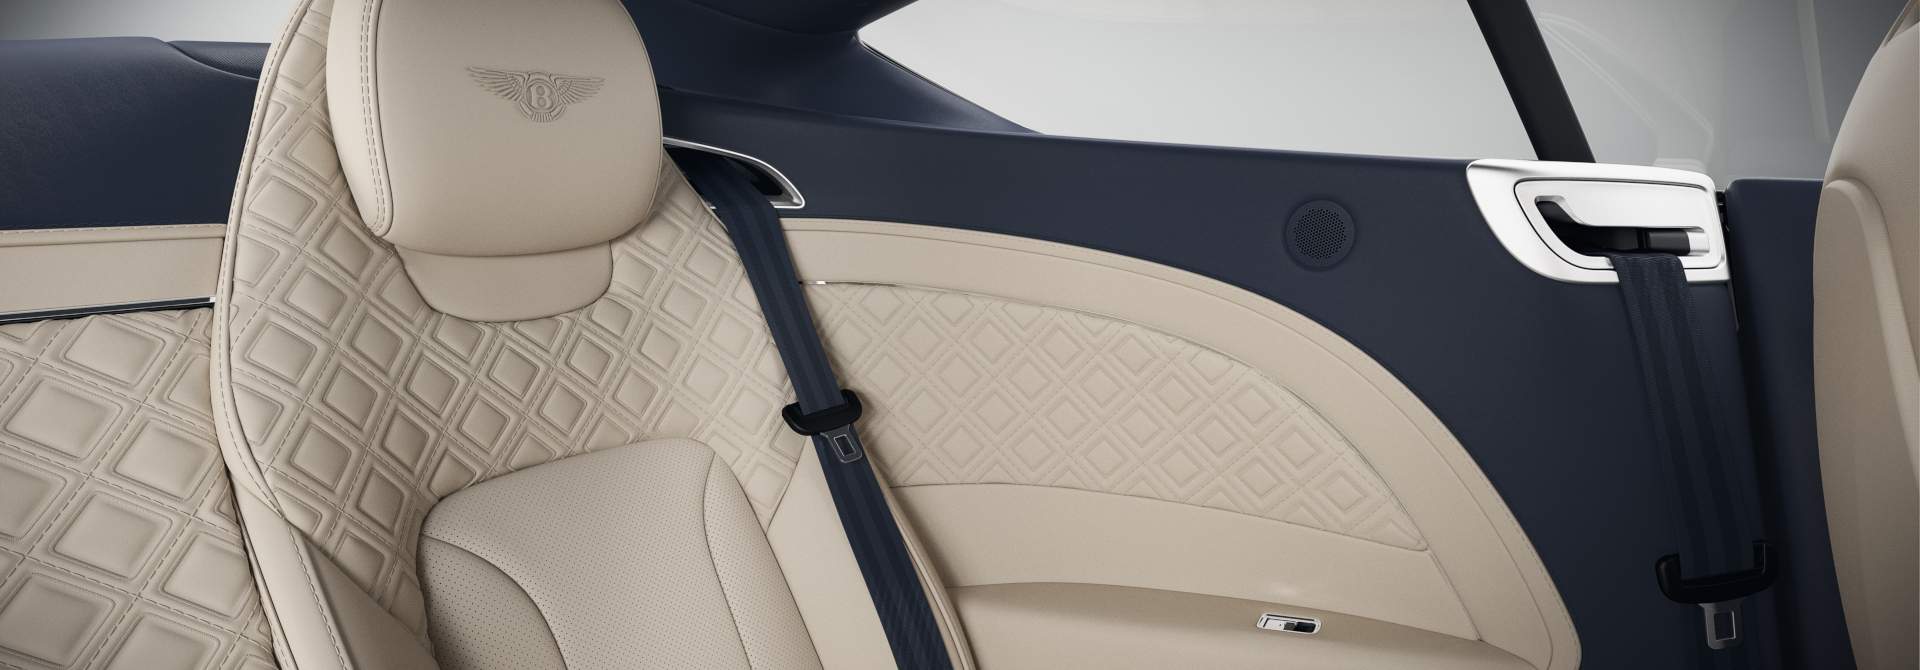 GT MullVis 1920x670 Contrast seatbelt.jpg